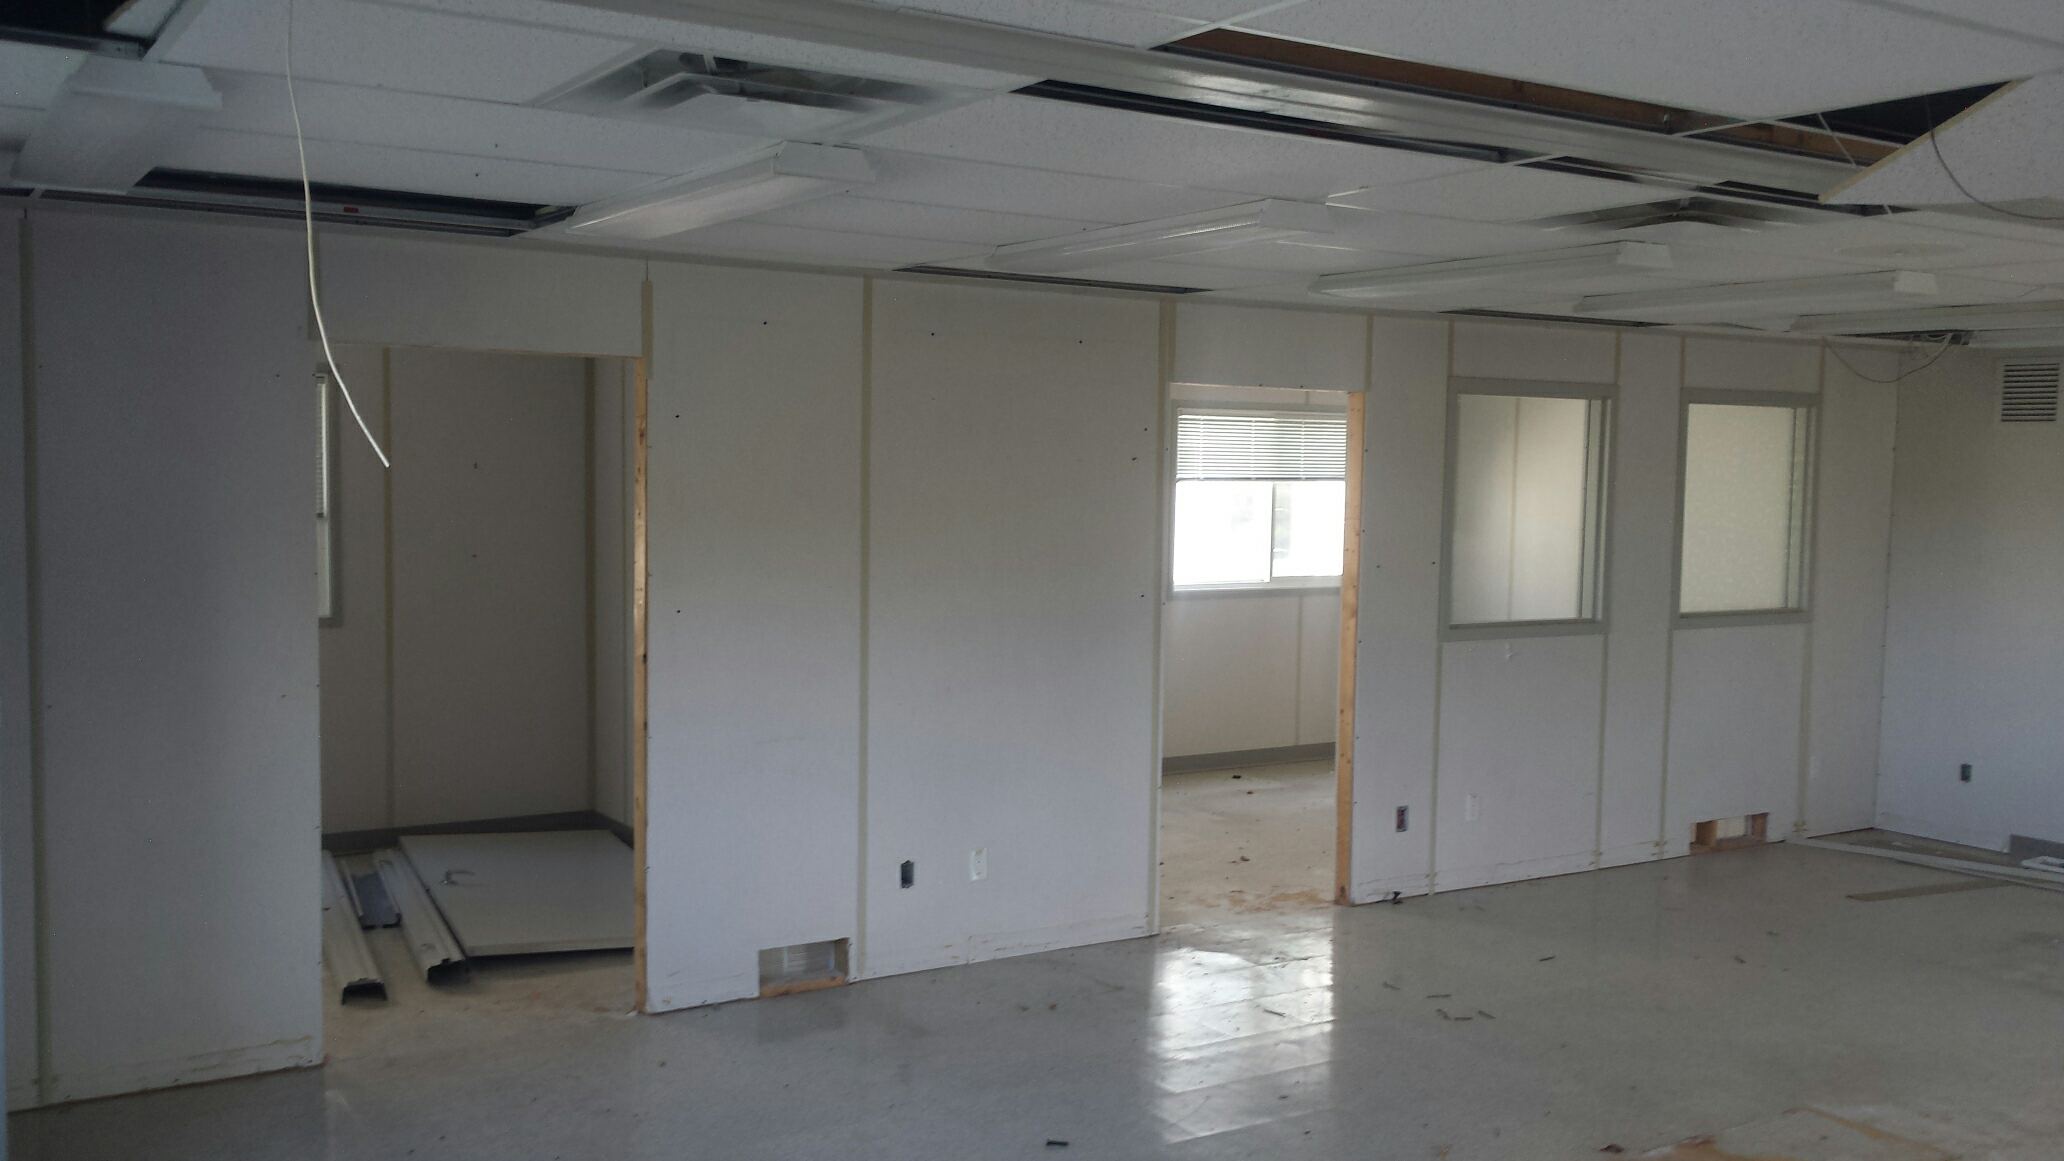 30x30 Portable Office, Classroom Building Inside